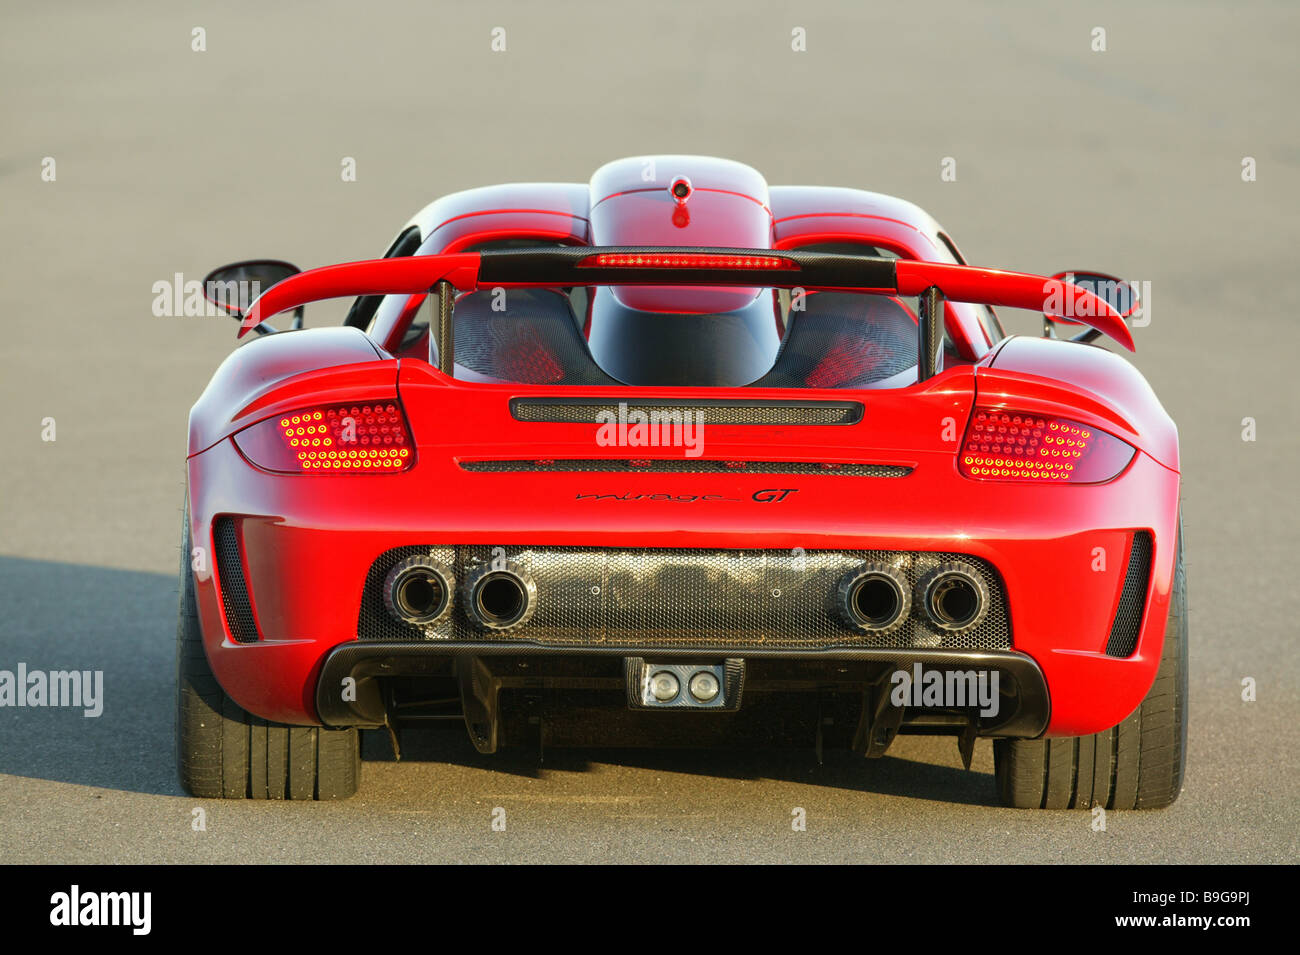 Rotes Auto spoiler Stockfotografie - Alamy